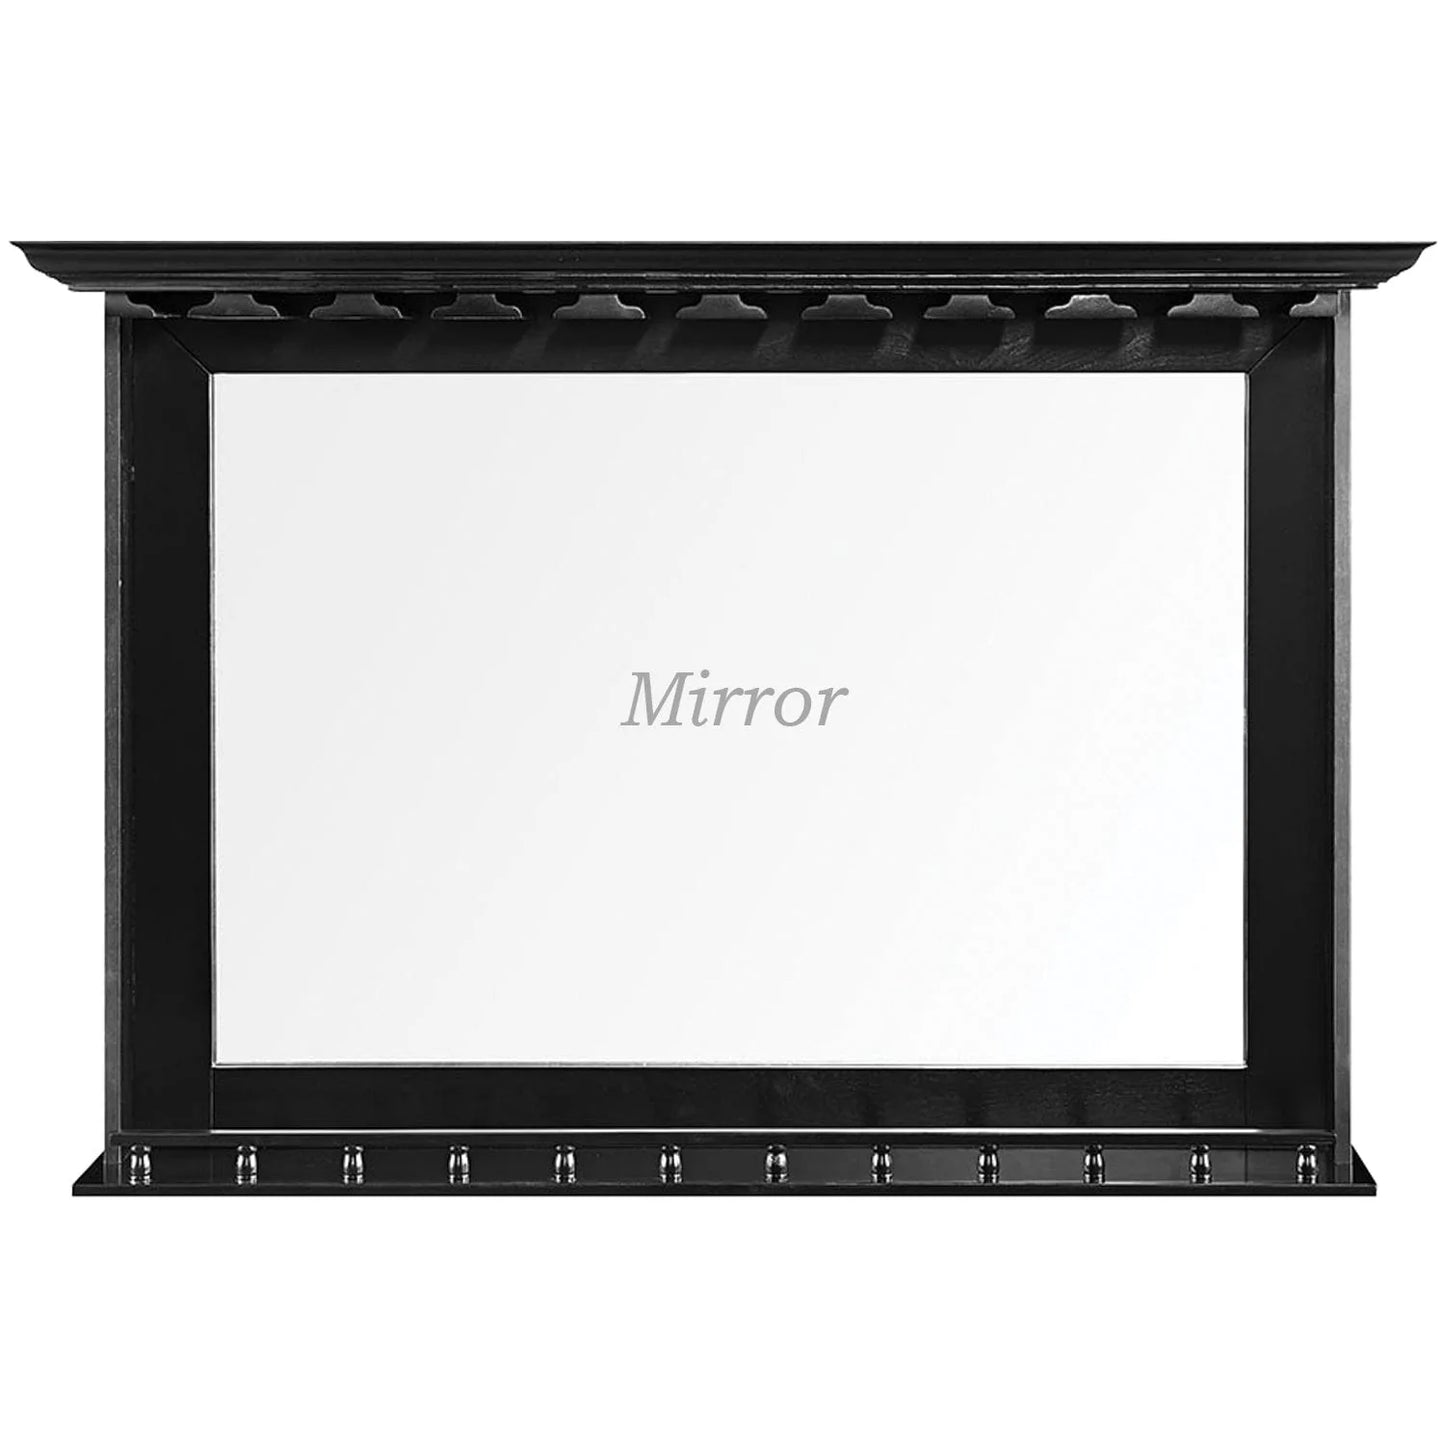 RAM Game Room Bar Mirrors & other BMR BLK Bar Mirror - Black